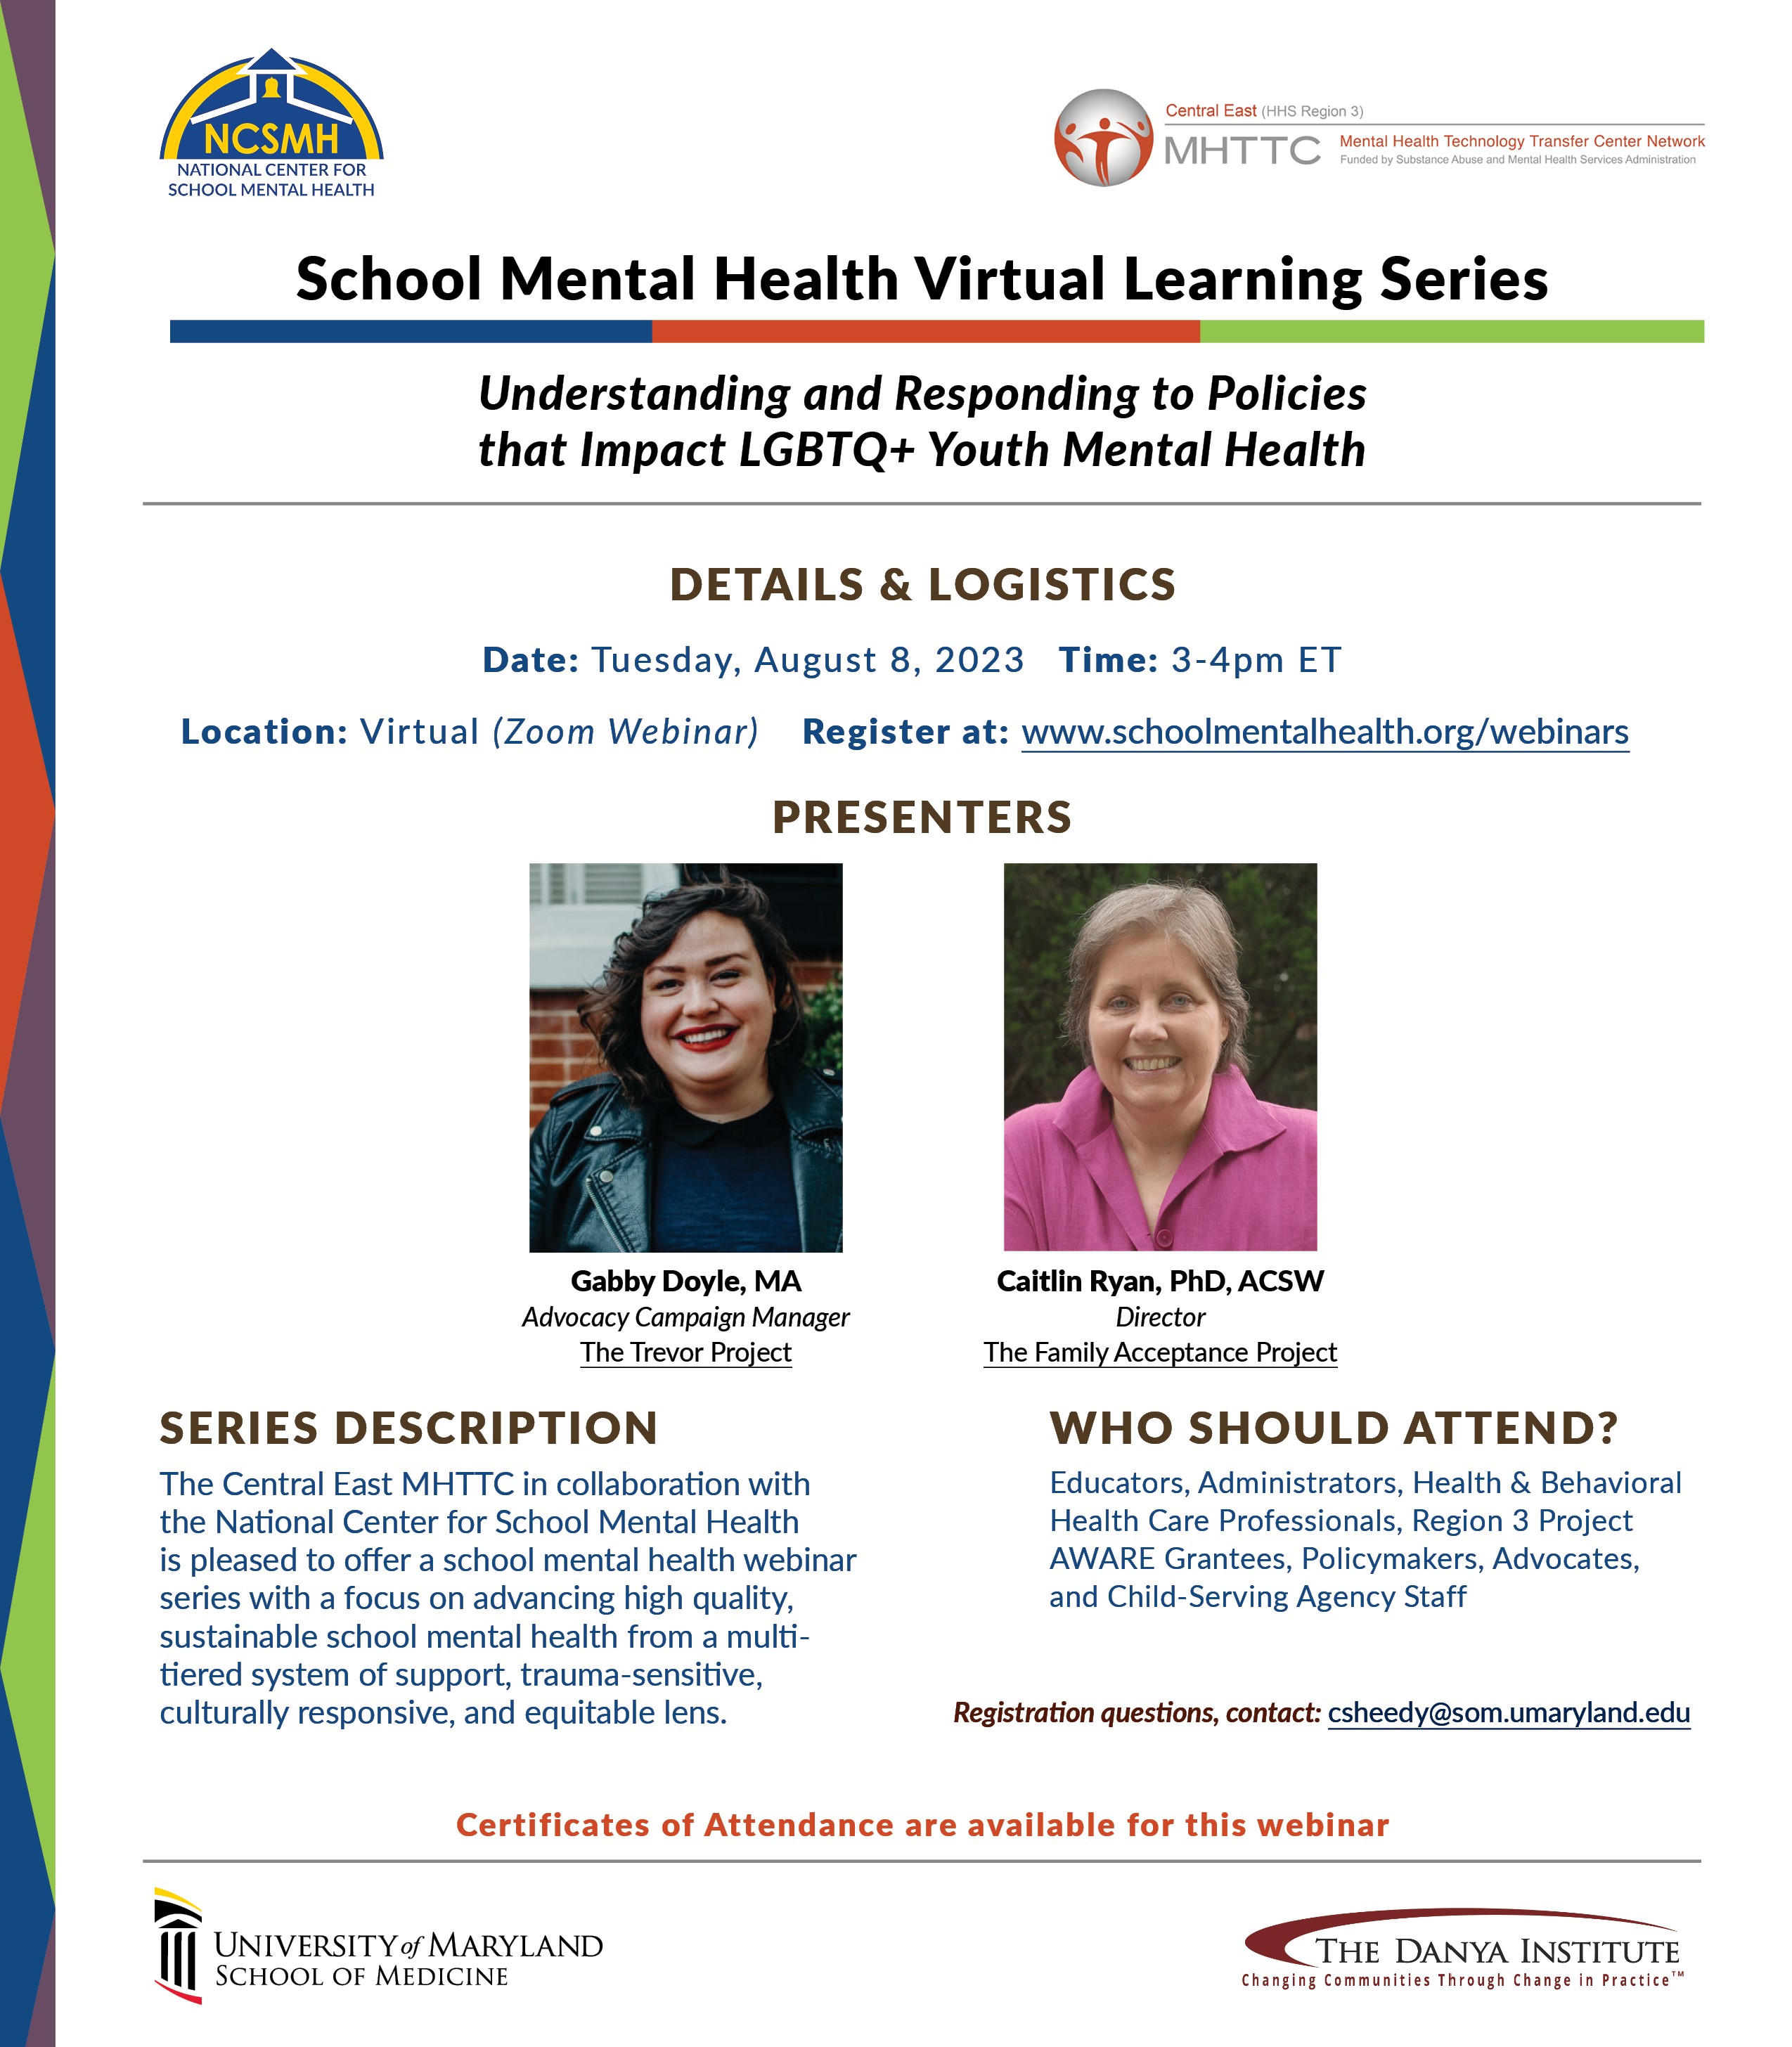 School Mental Health Virtual Learning Series June through September 2023